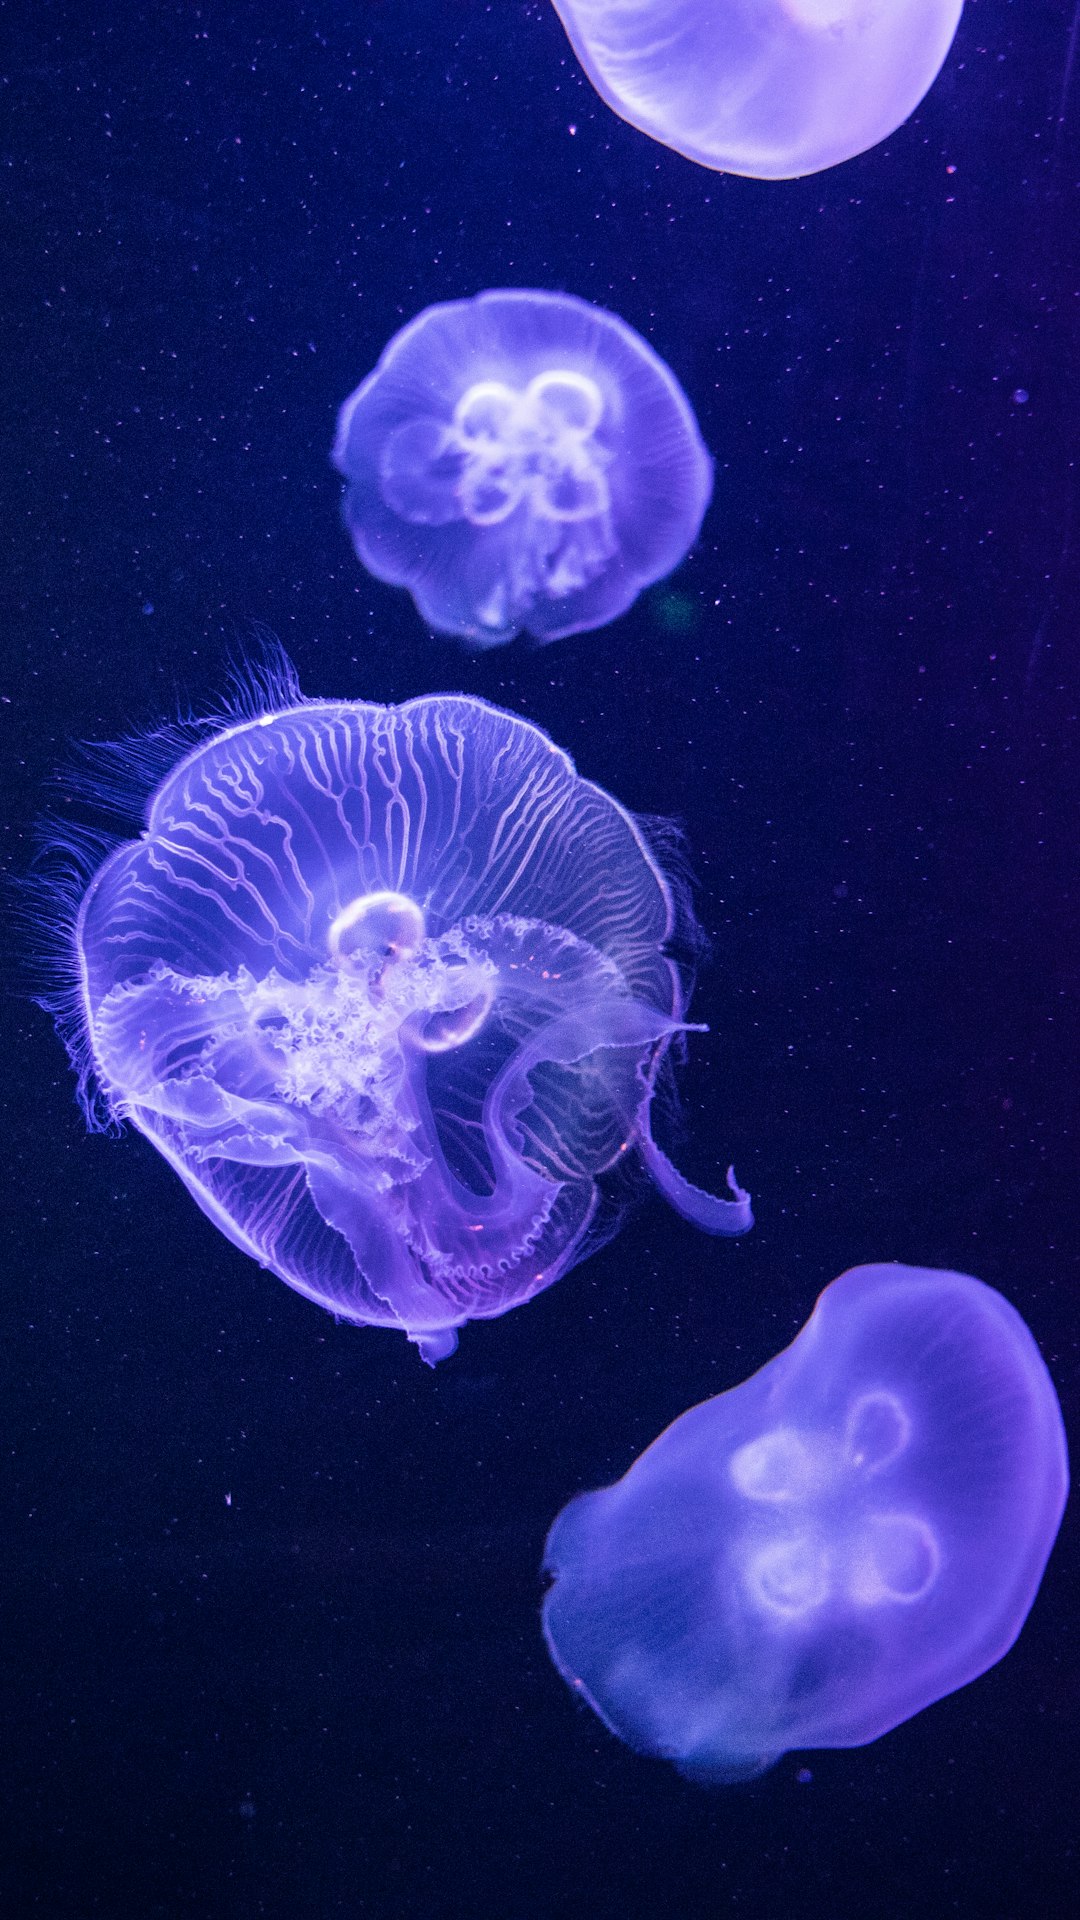 purple and white jellyfish on black background